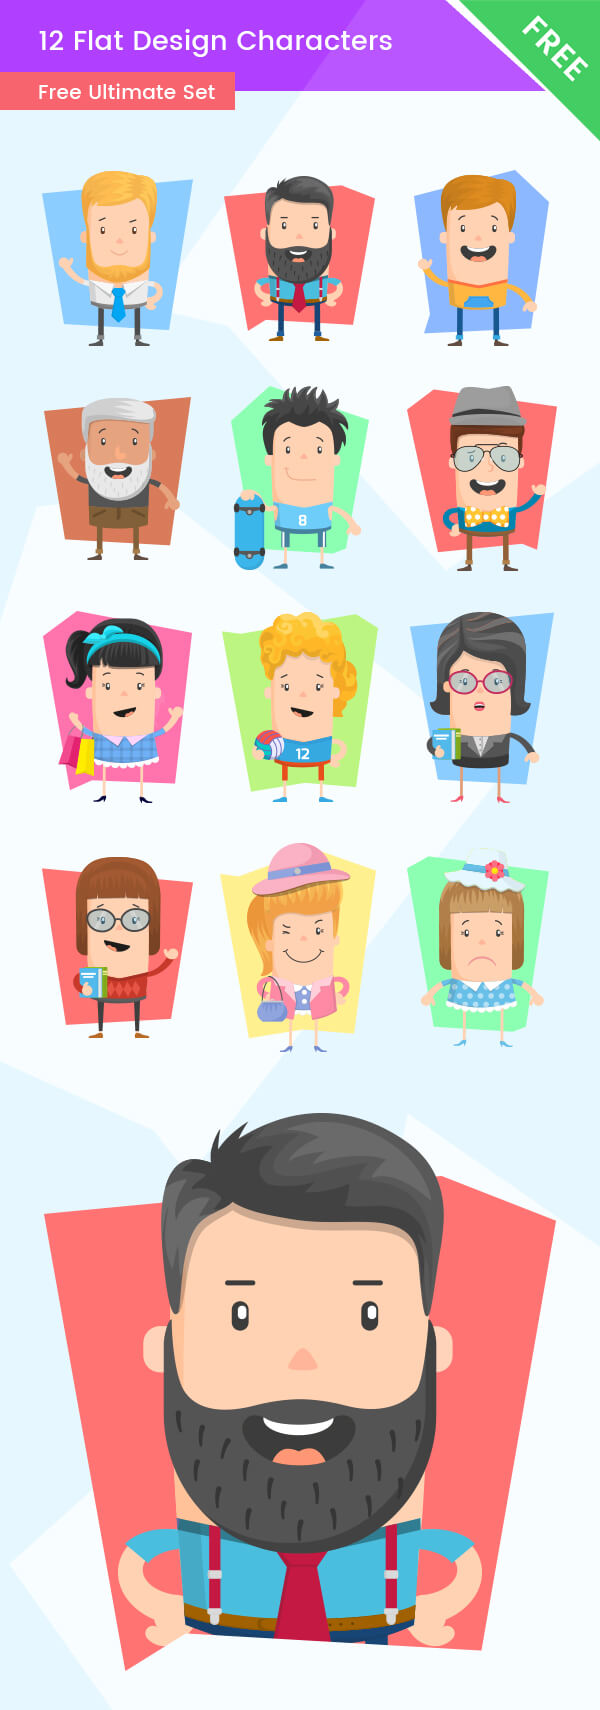 Flat Design Characters - Free Ultimate Set, flat characters, flat cartoons, free cartoon characters